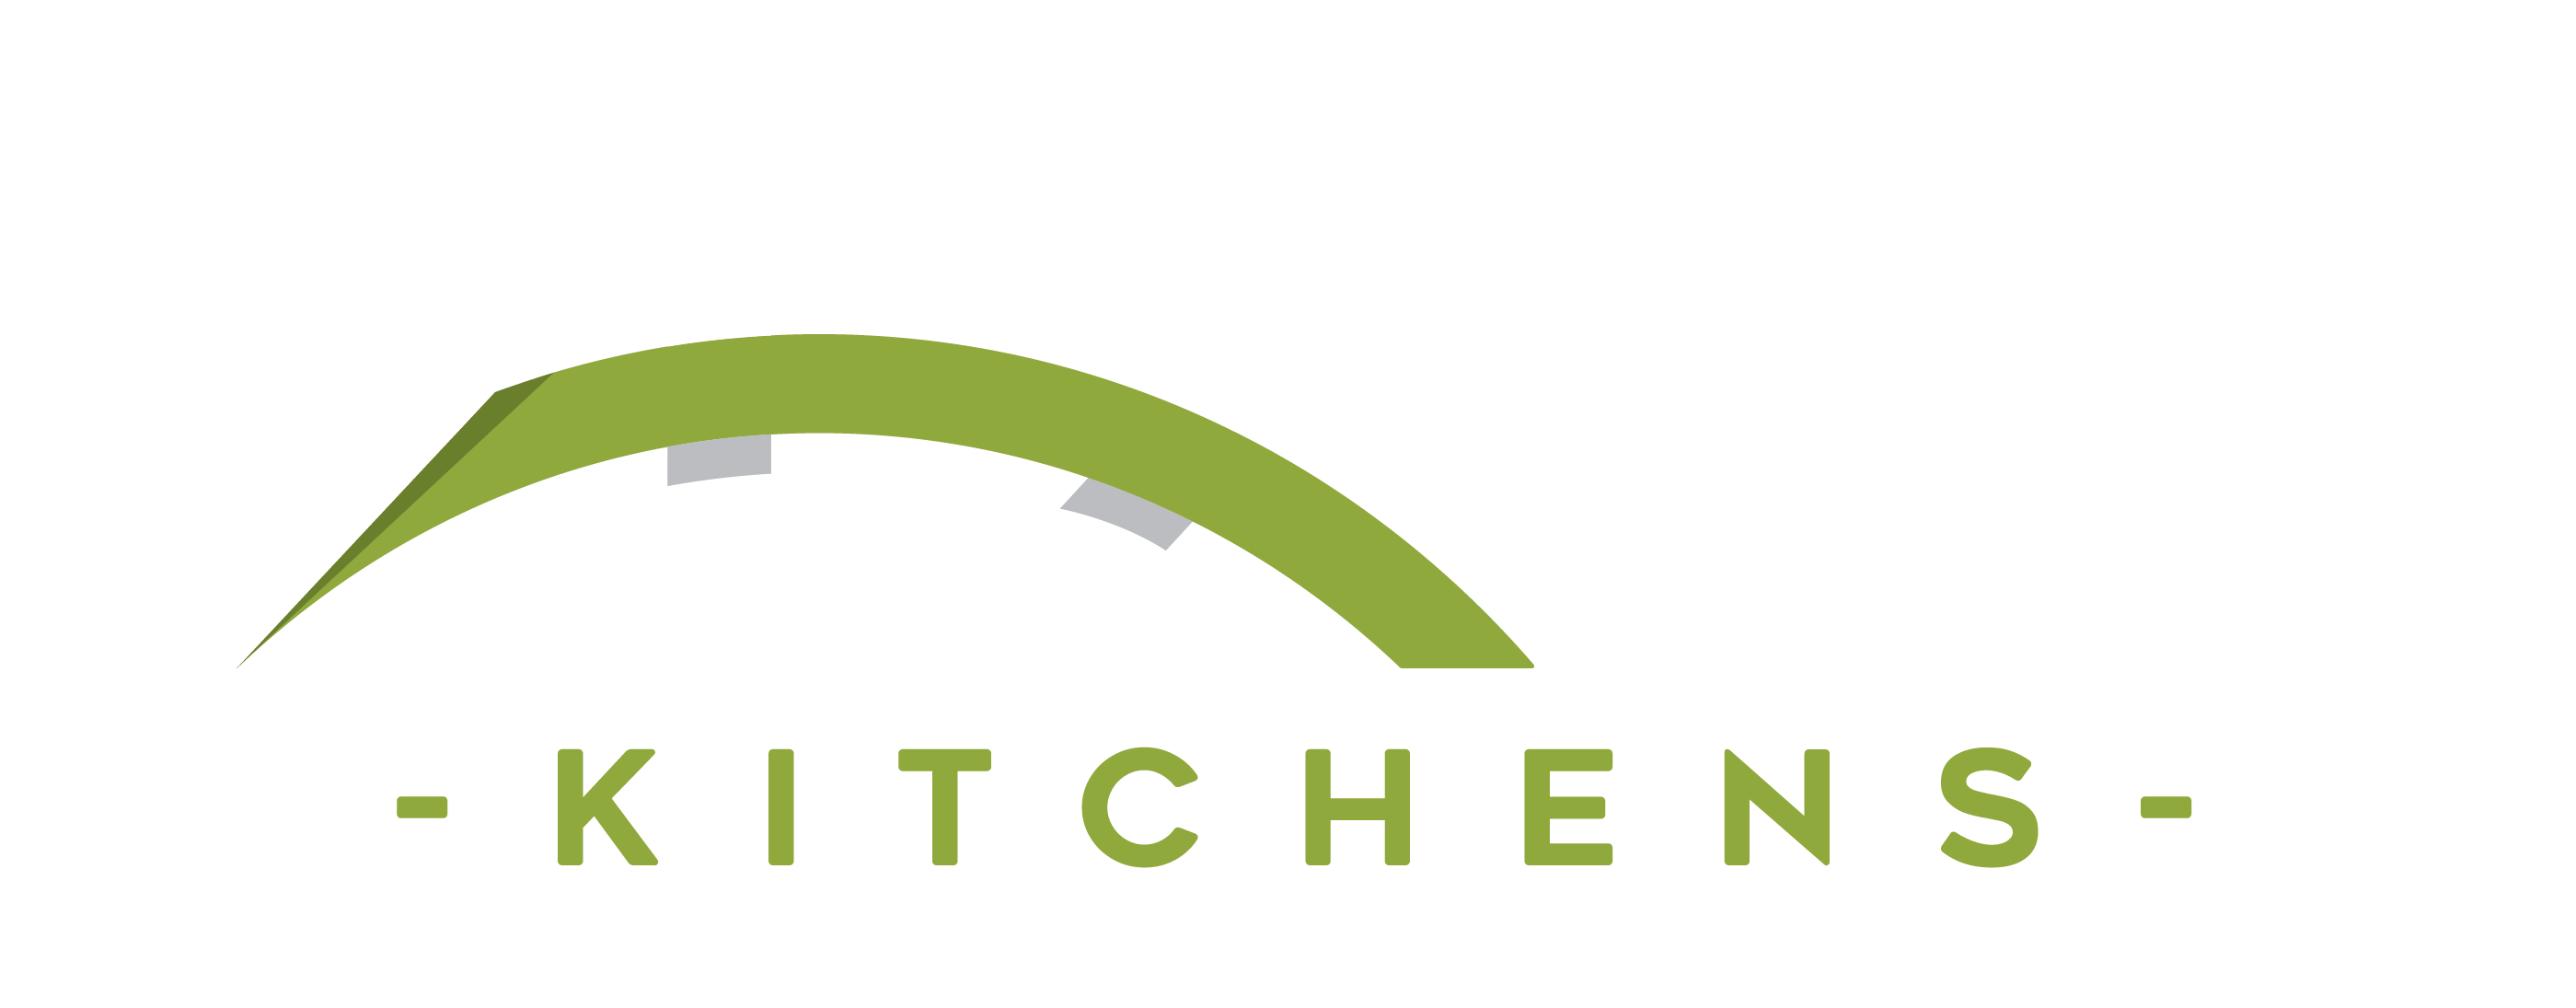 Axis Kitchens Logo - Dark Bg